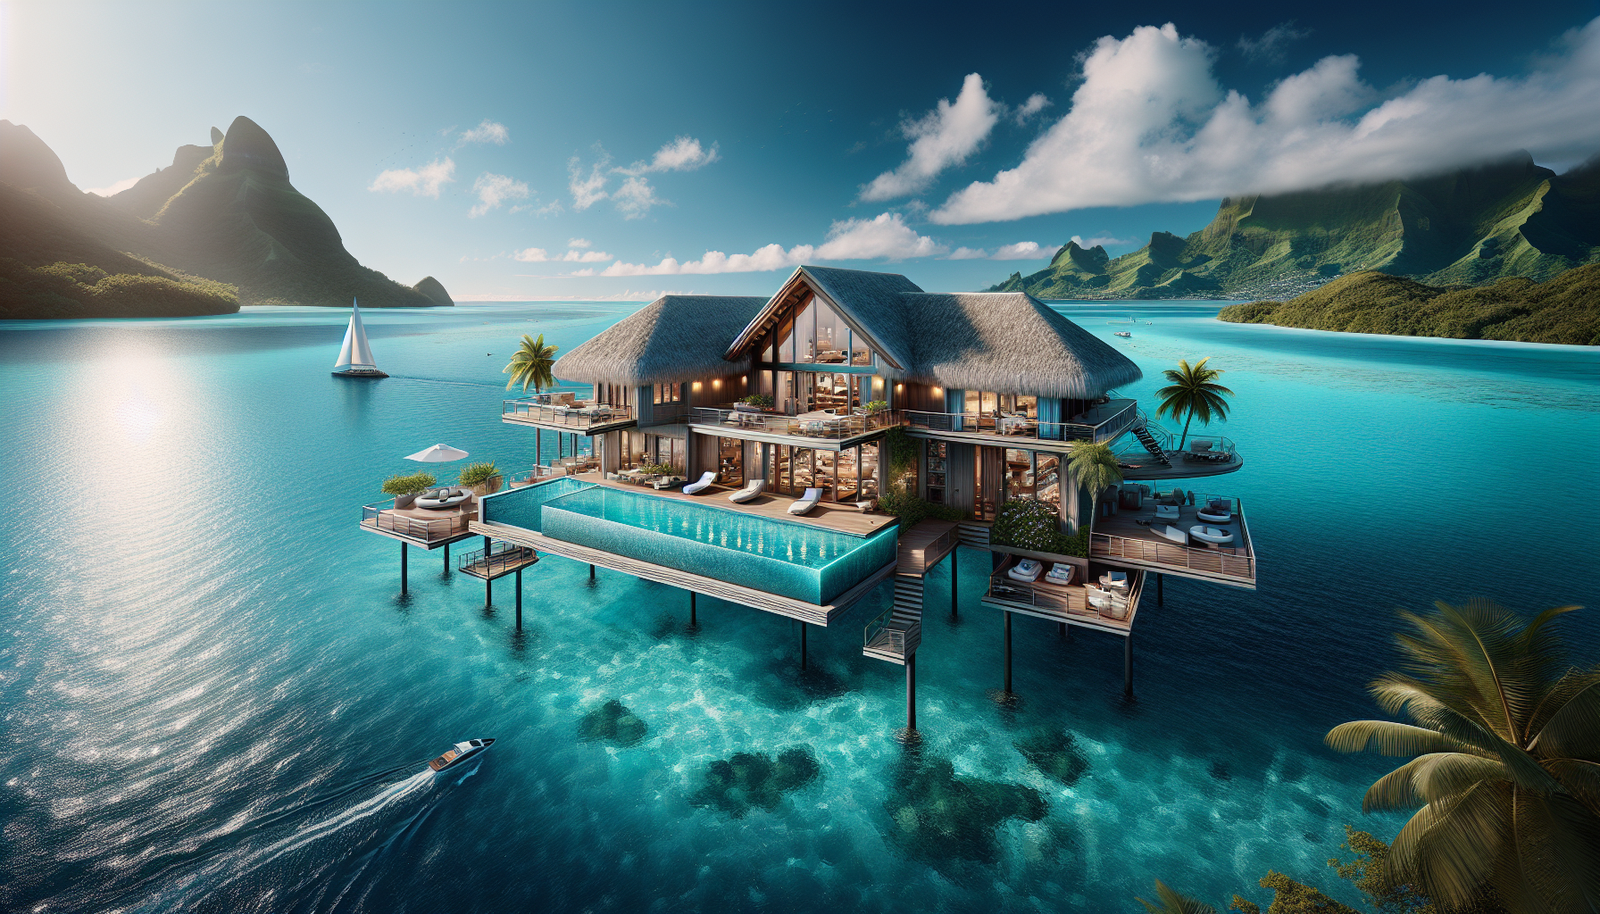 10 Questions To Ask When Booking Overwater Villas In Bora Bora